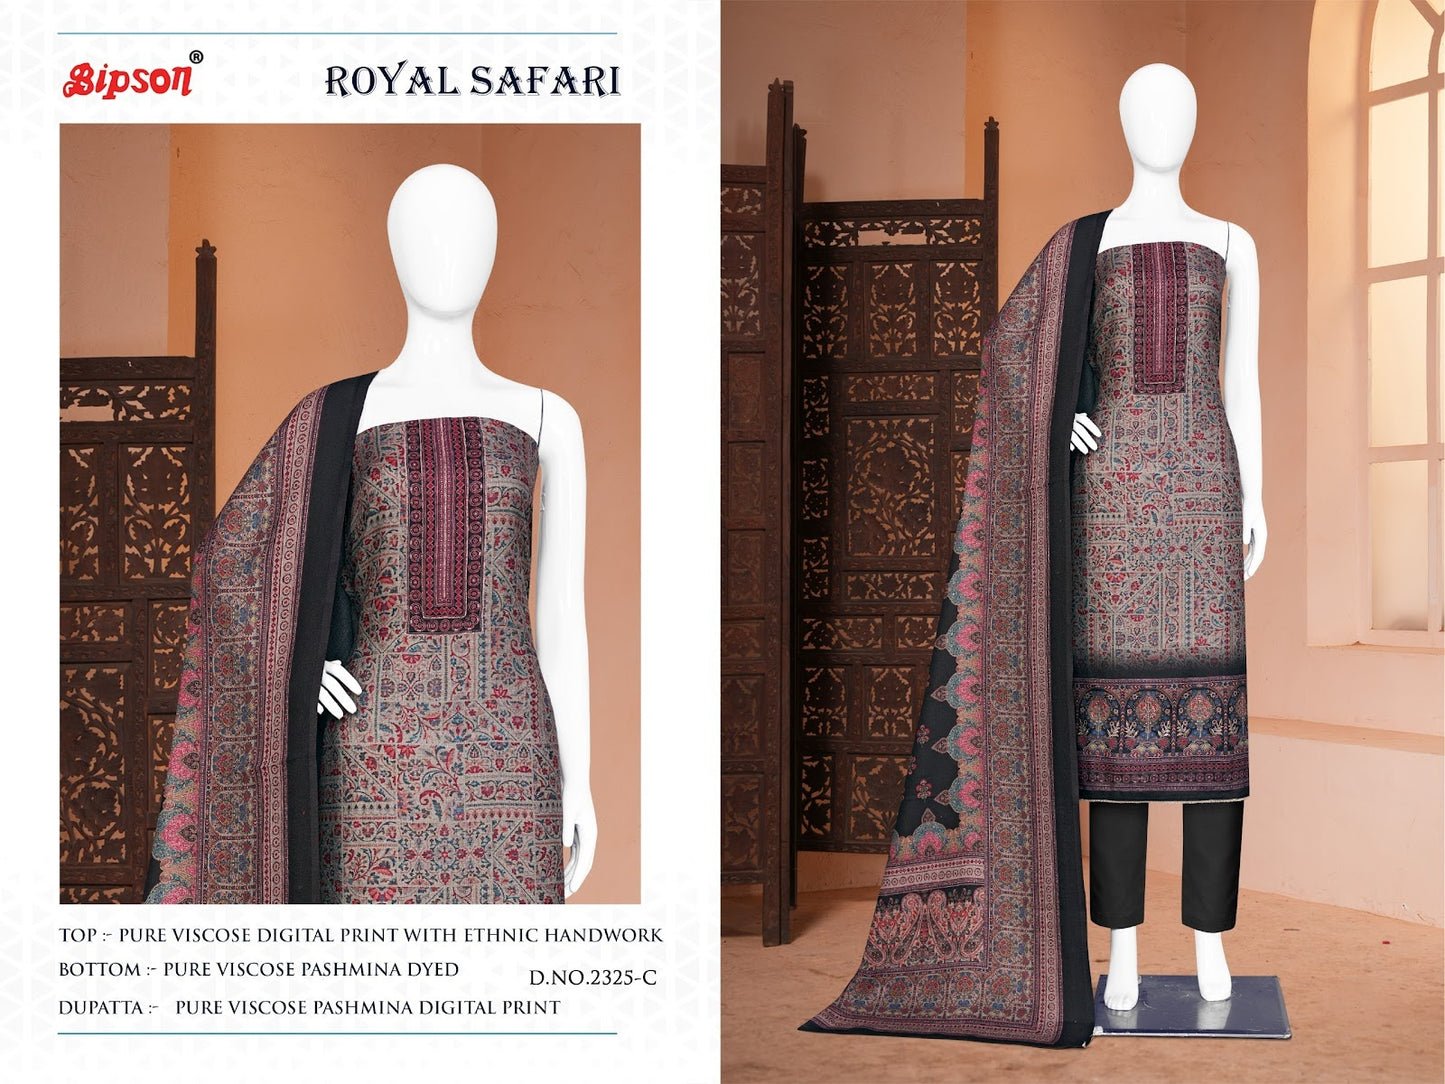 Royal Safari 2325 Bipson Prints Pashmina Suits